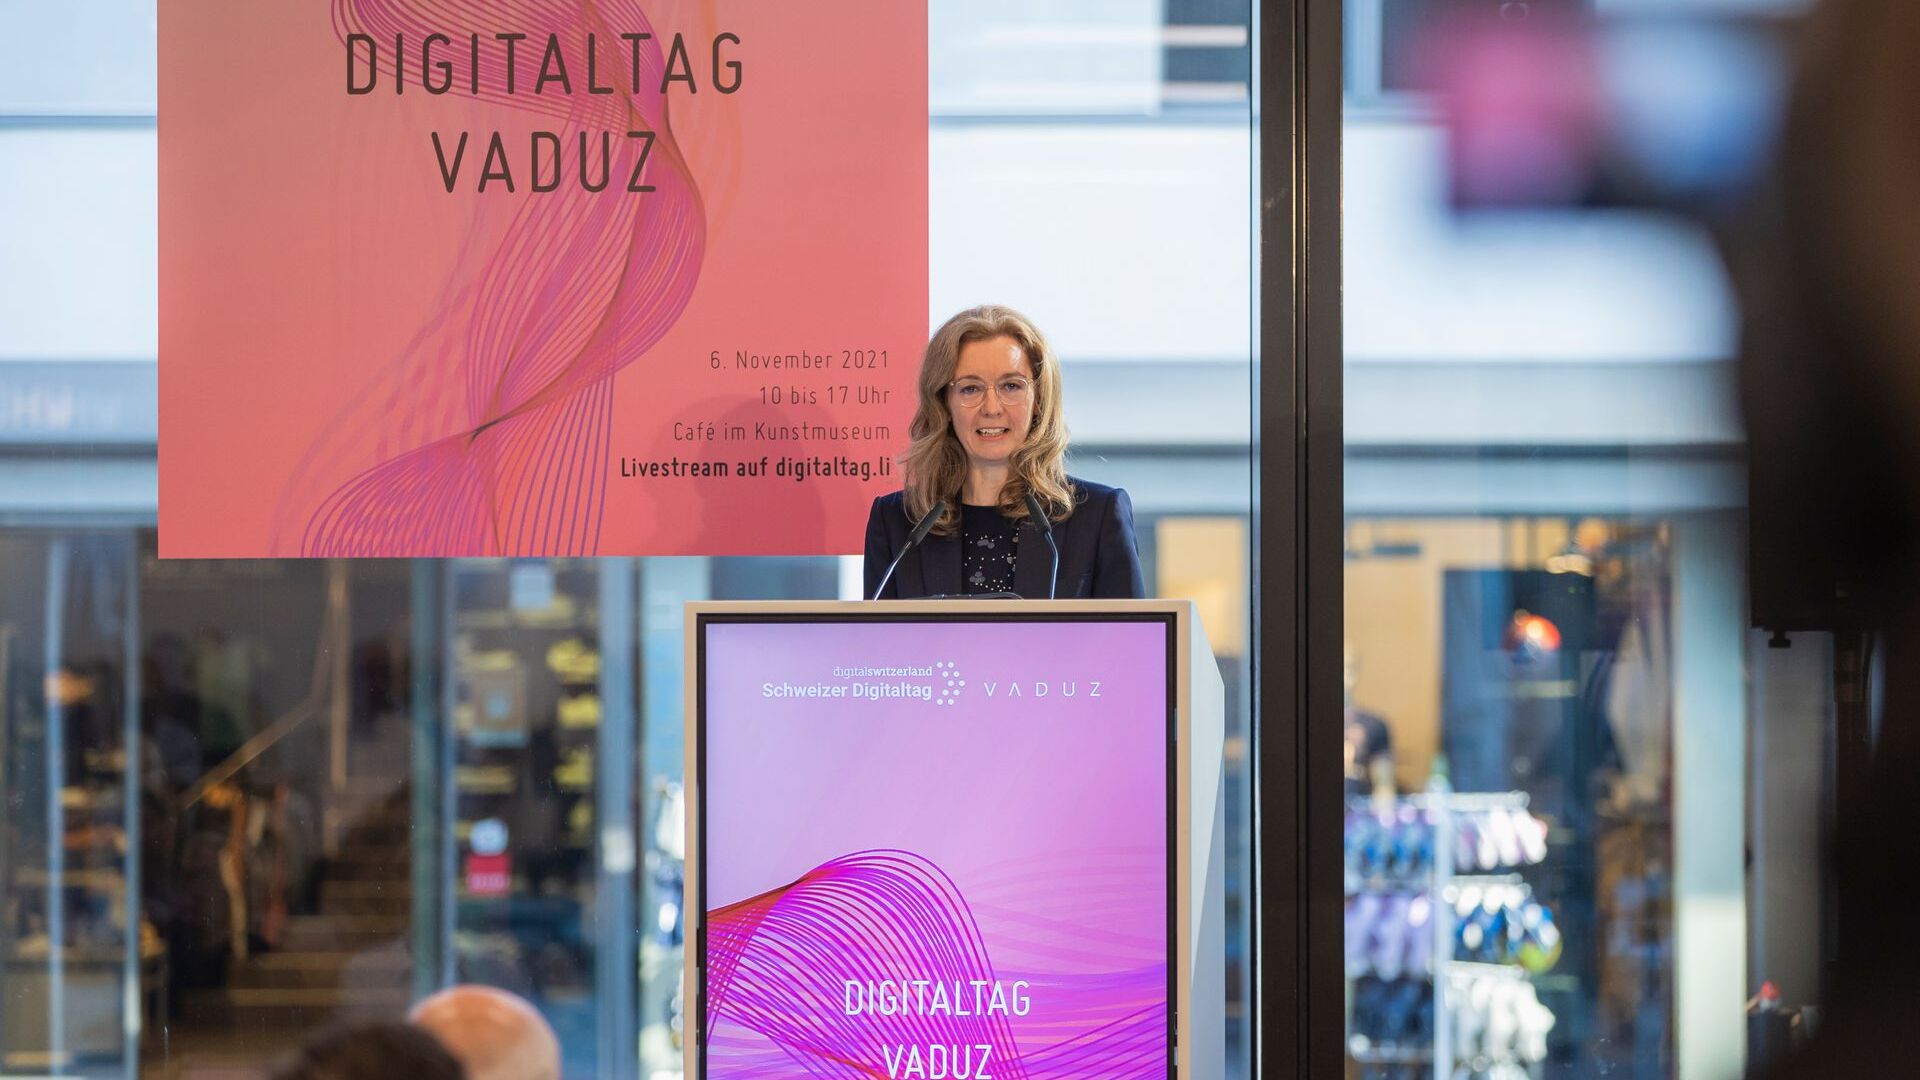 "Digitaltag Vaduz", რომელსაც მიესალმა ლიხტენშტეინის სამთავროს დედაქალაქის Kunstmuseum-მა შაბათს, 6 წლის 2021 ნოემბერს, გამოიწვია საზოგადოებისა და მომხსენებლების ენთუზიაზმი მომდევნო მე-10 დღის "შვეიცარიის ციფრული დღის" ანალოგიურად: ვიცე-პრემიერი საბინე მუნანის გამოსვლა.